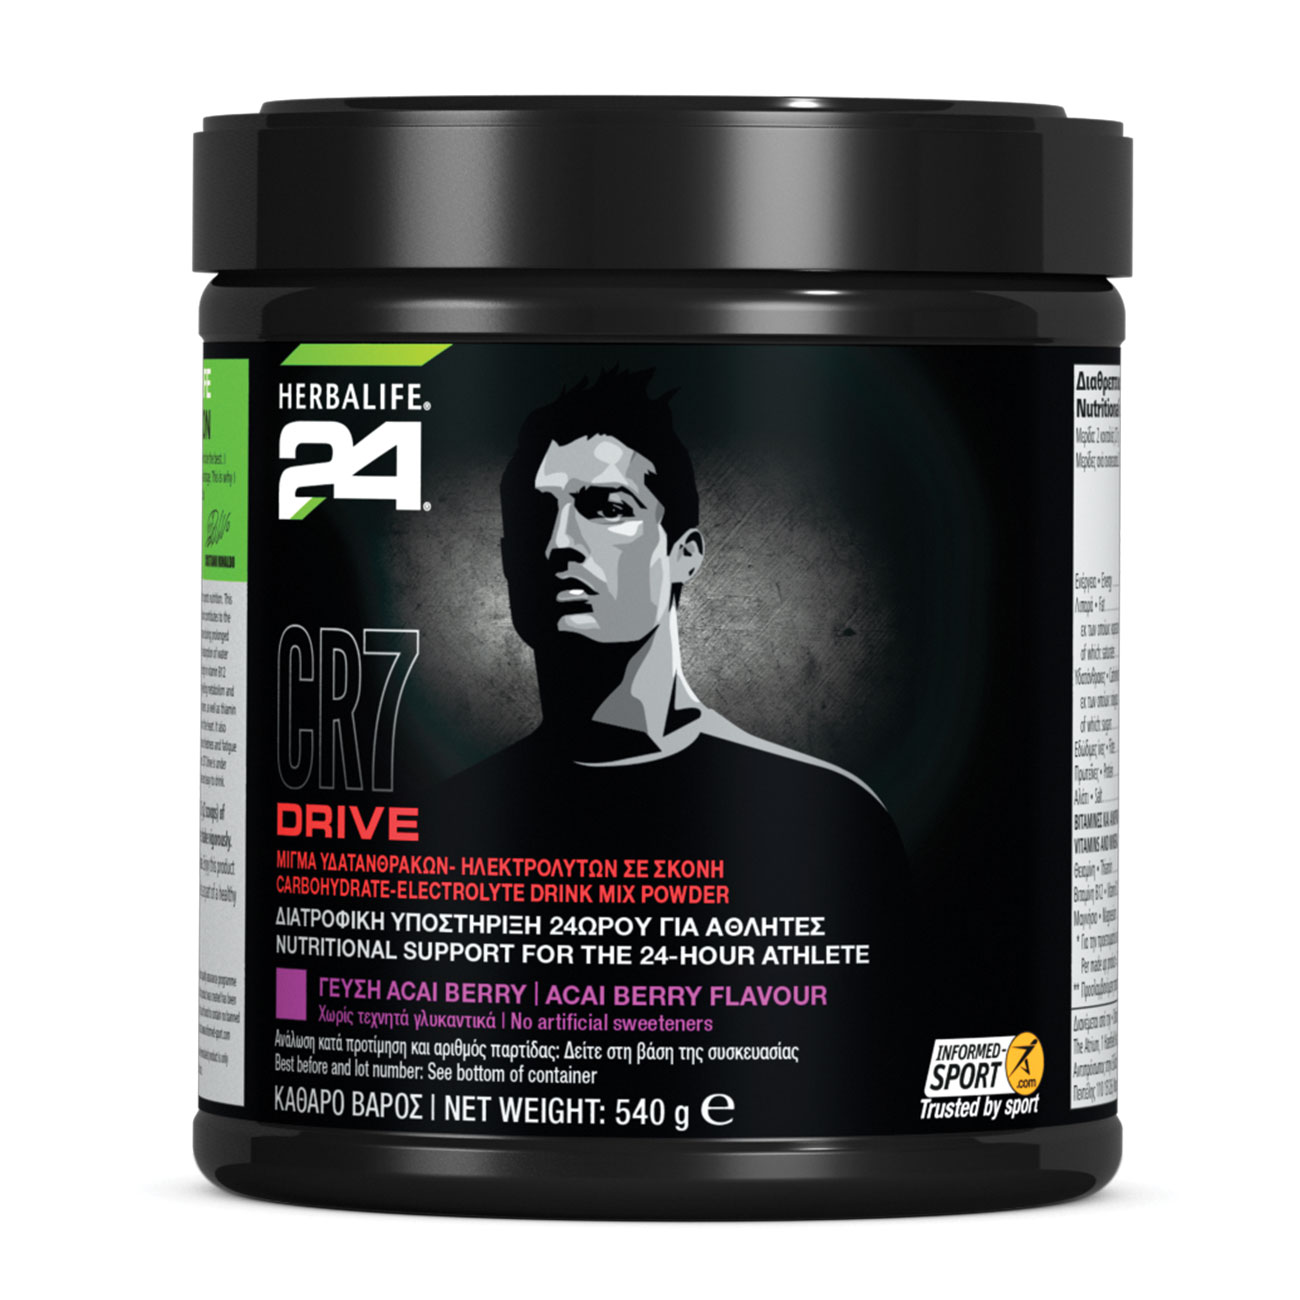 Herbalife24® CR7 Drive Αθλητικό Ρόφημα με Γεύση Acai Berry product shot